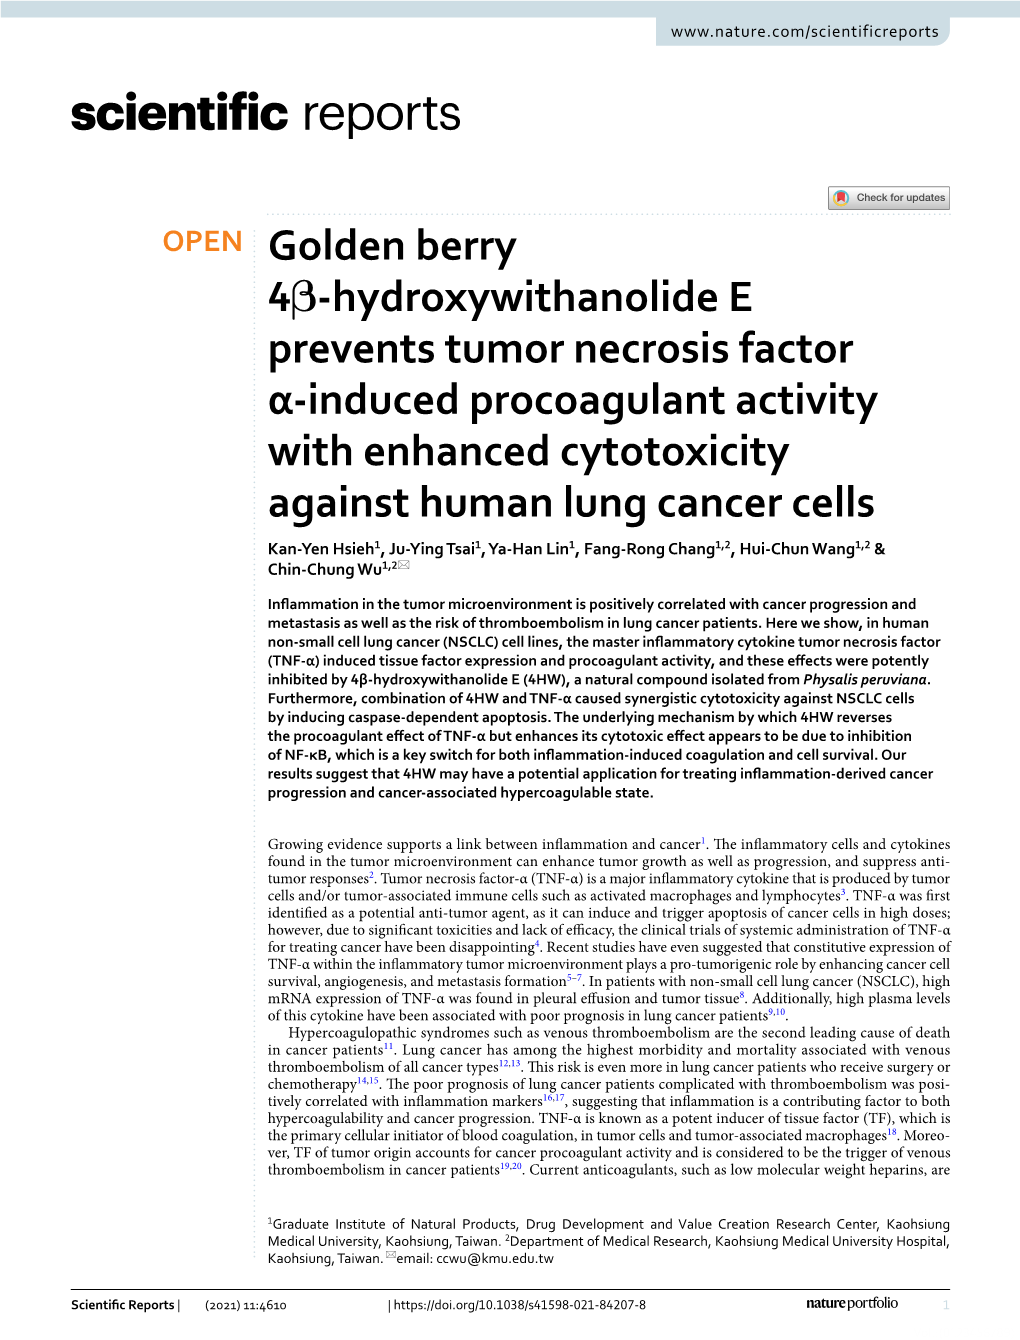 Golden Berry 4Β-Hydroxywithanolide E Prevents Tumor Necrosis Factor Α